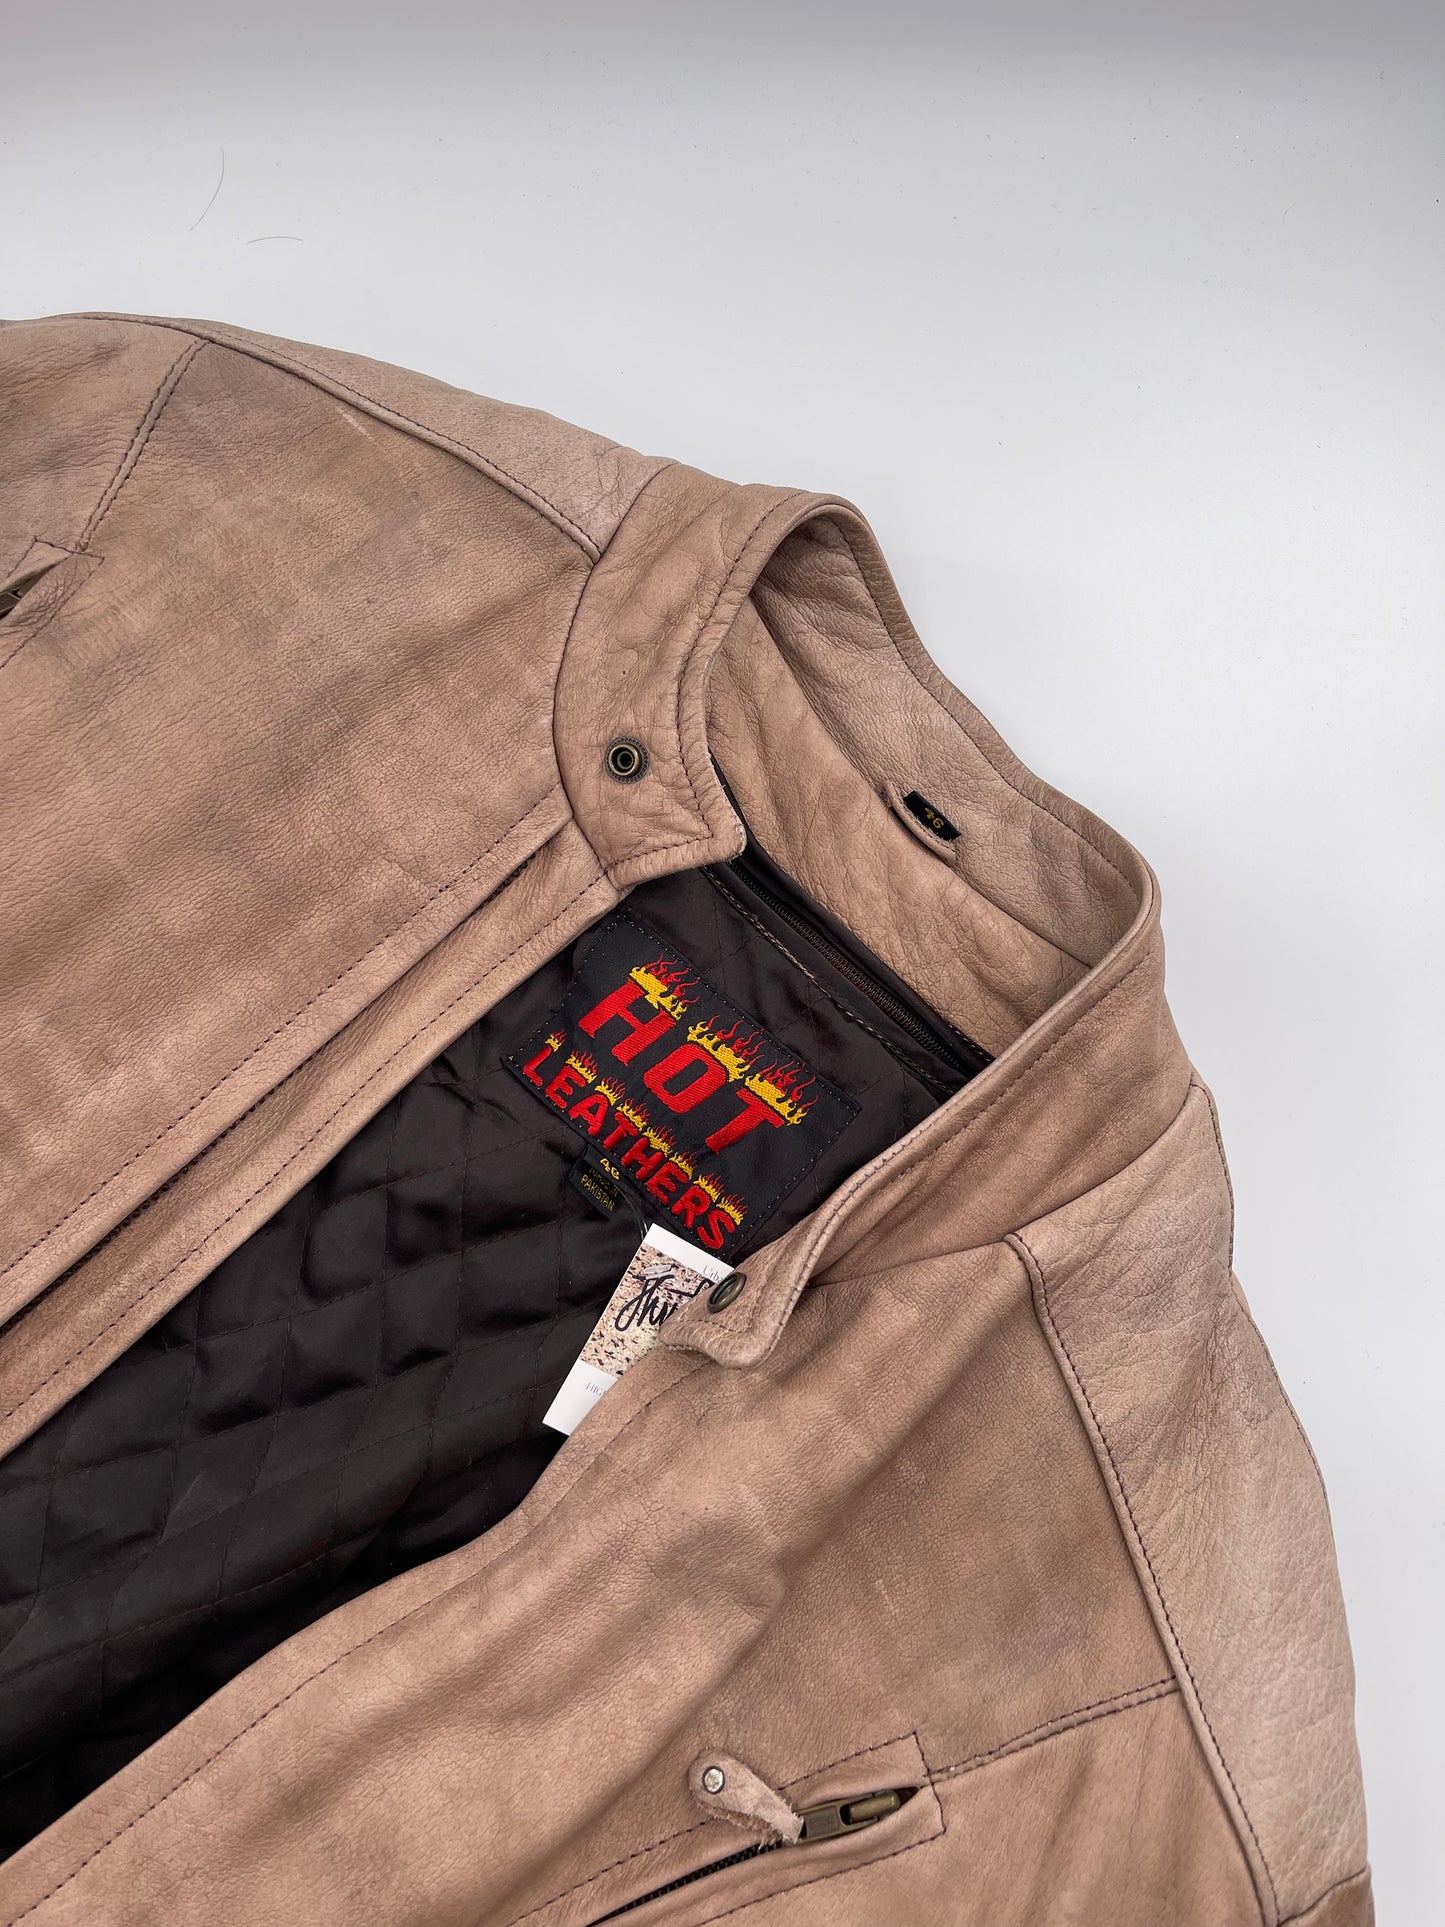 Hot Leathers Light Beige Leather Jacket Front Zipper (Size 46)